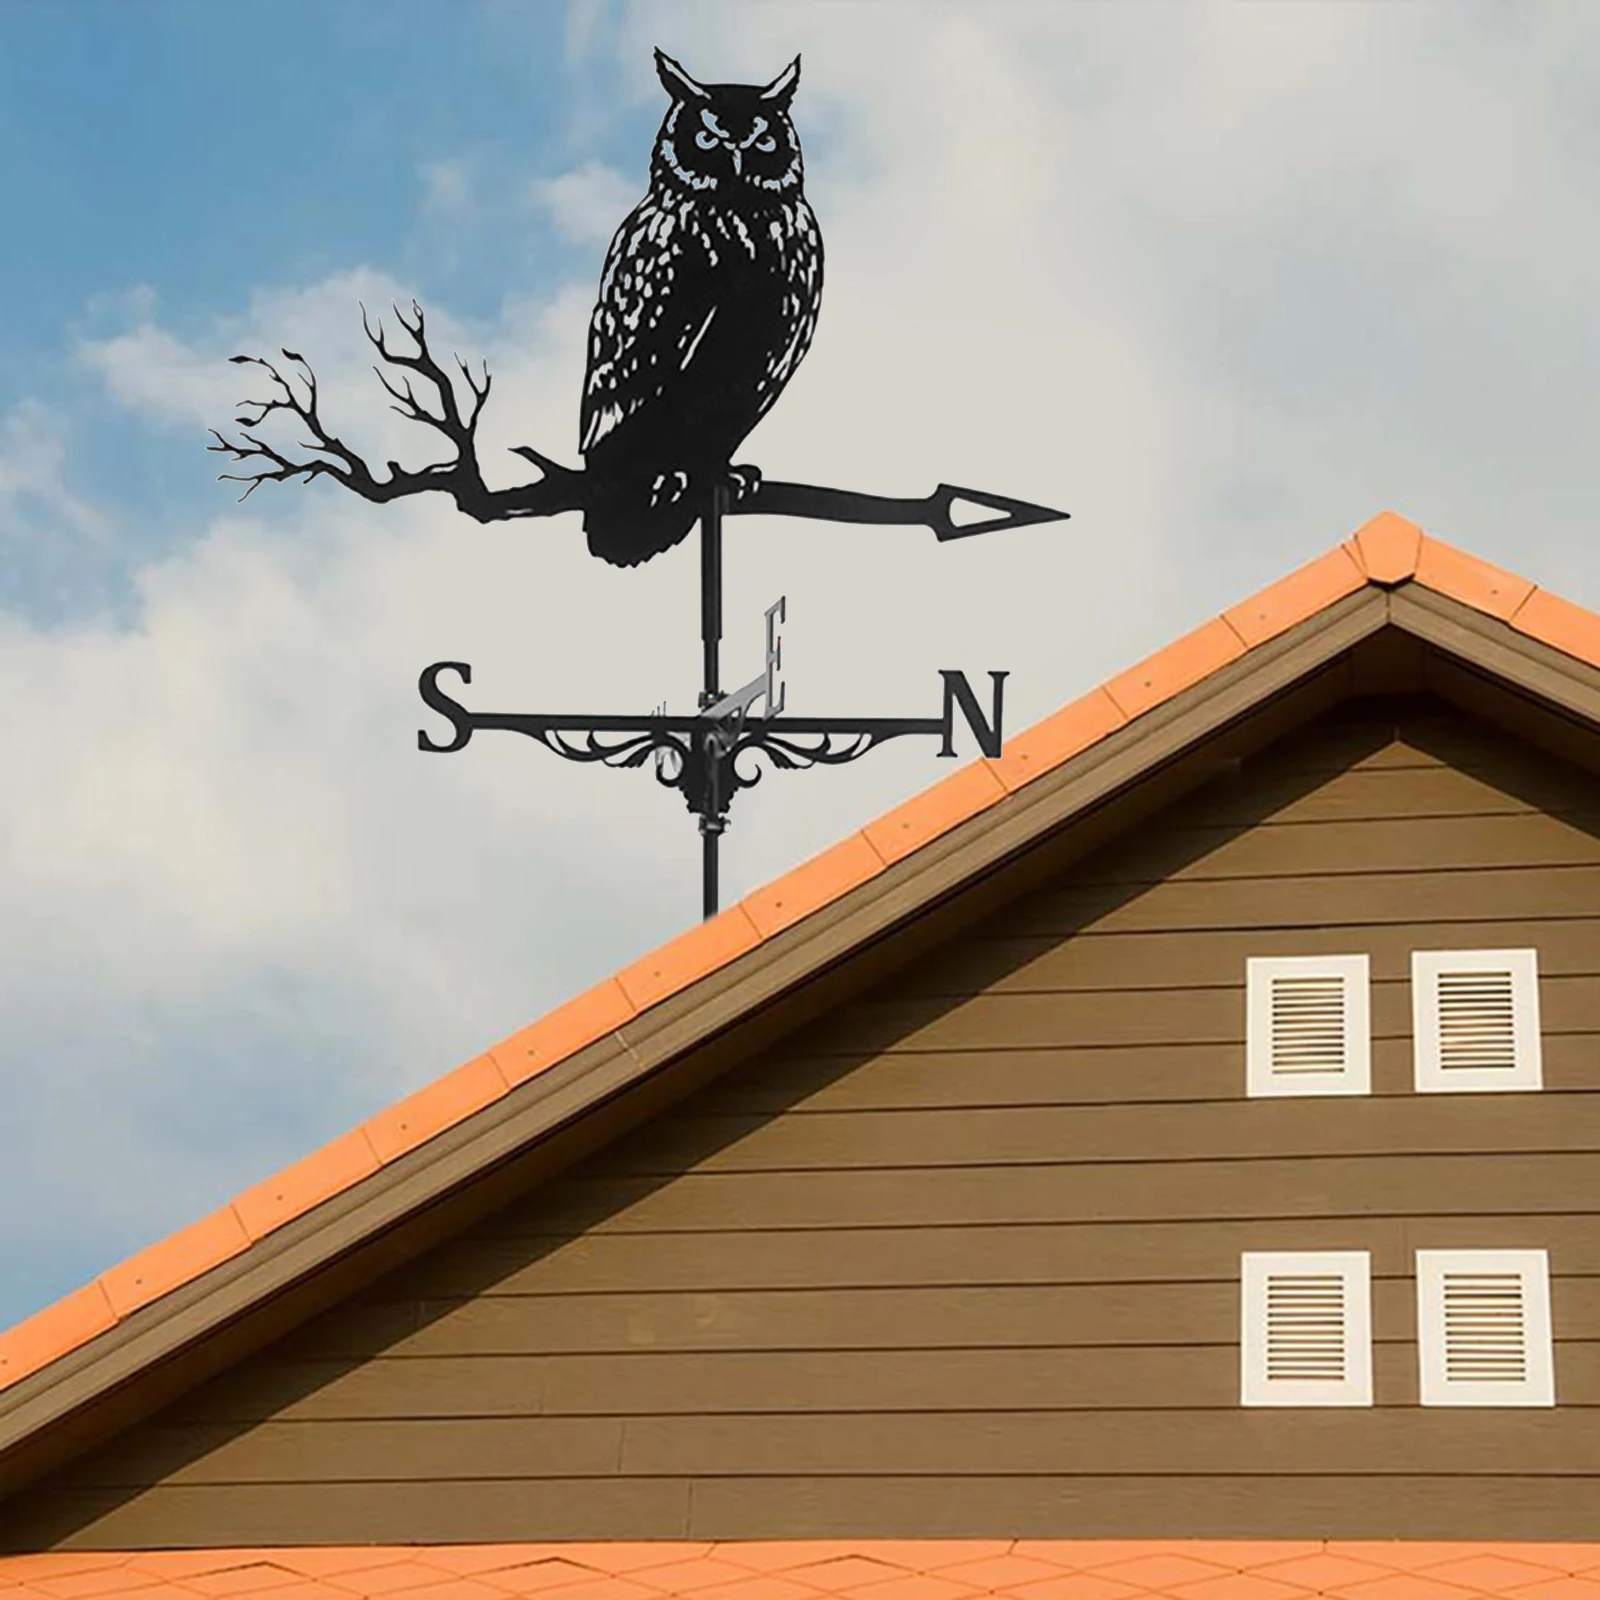 Practical Owl Weathervane Roof Mount Weather Vane Yard Farm 30inch Tall